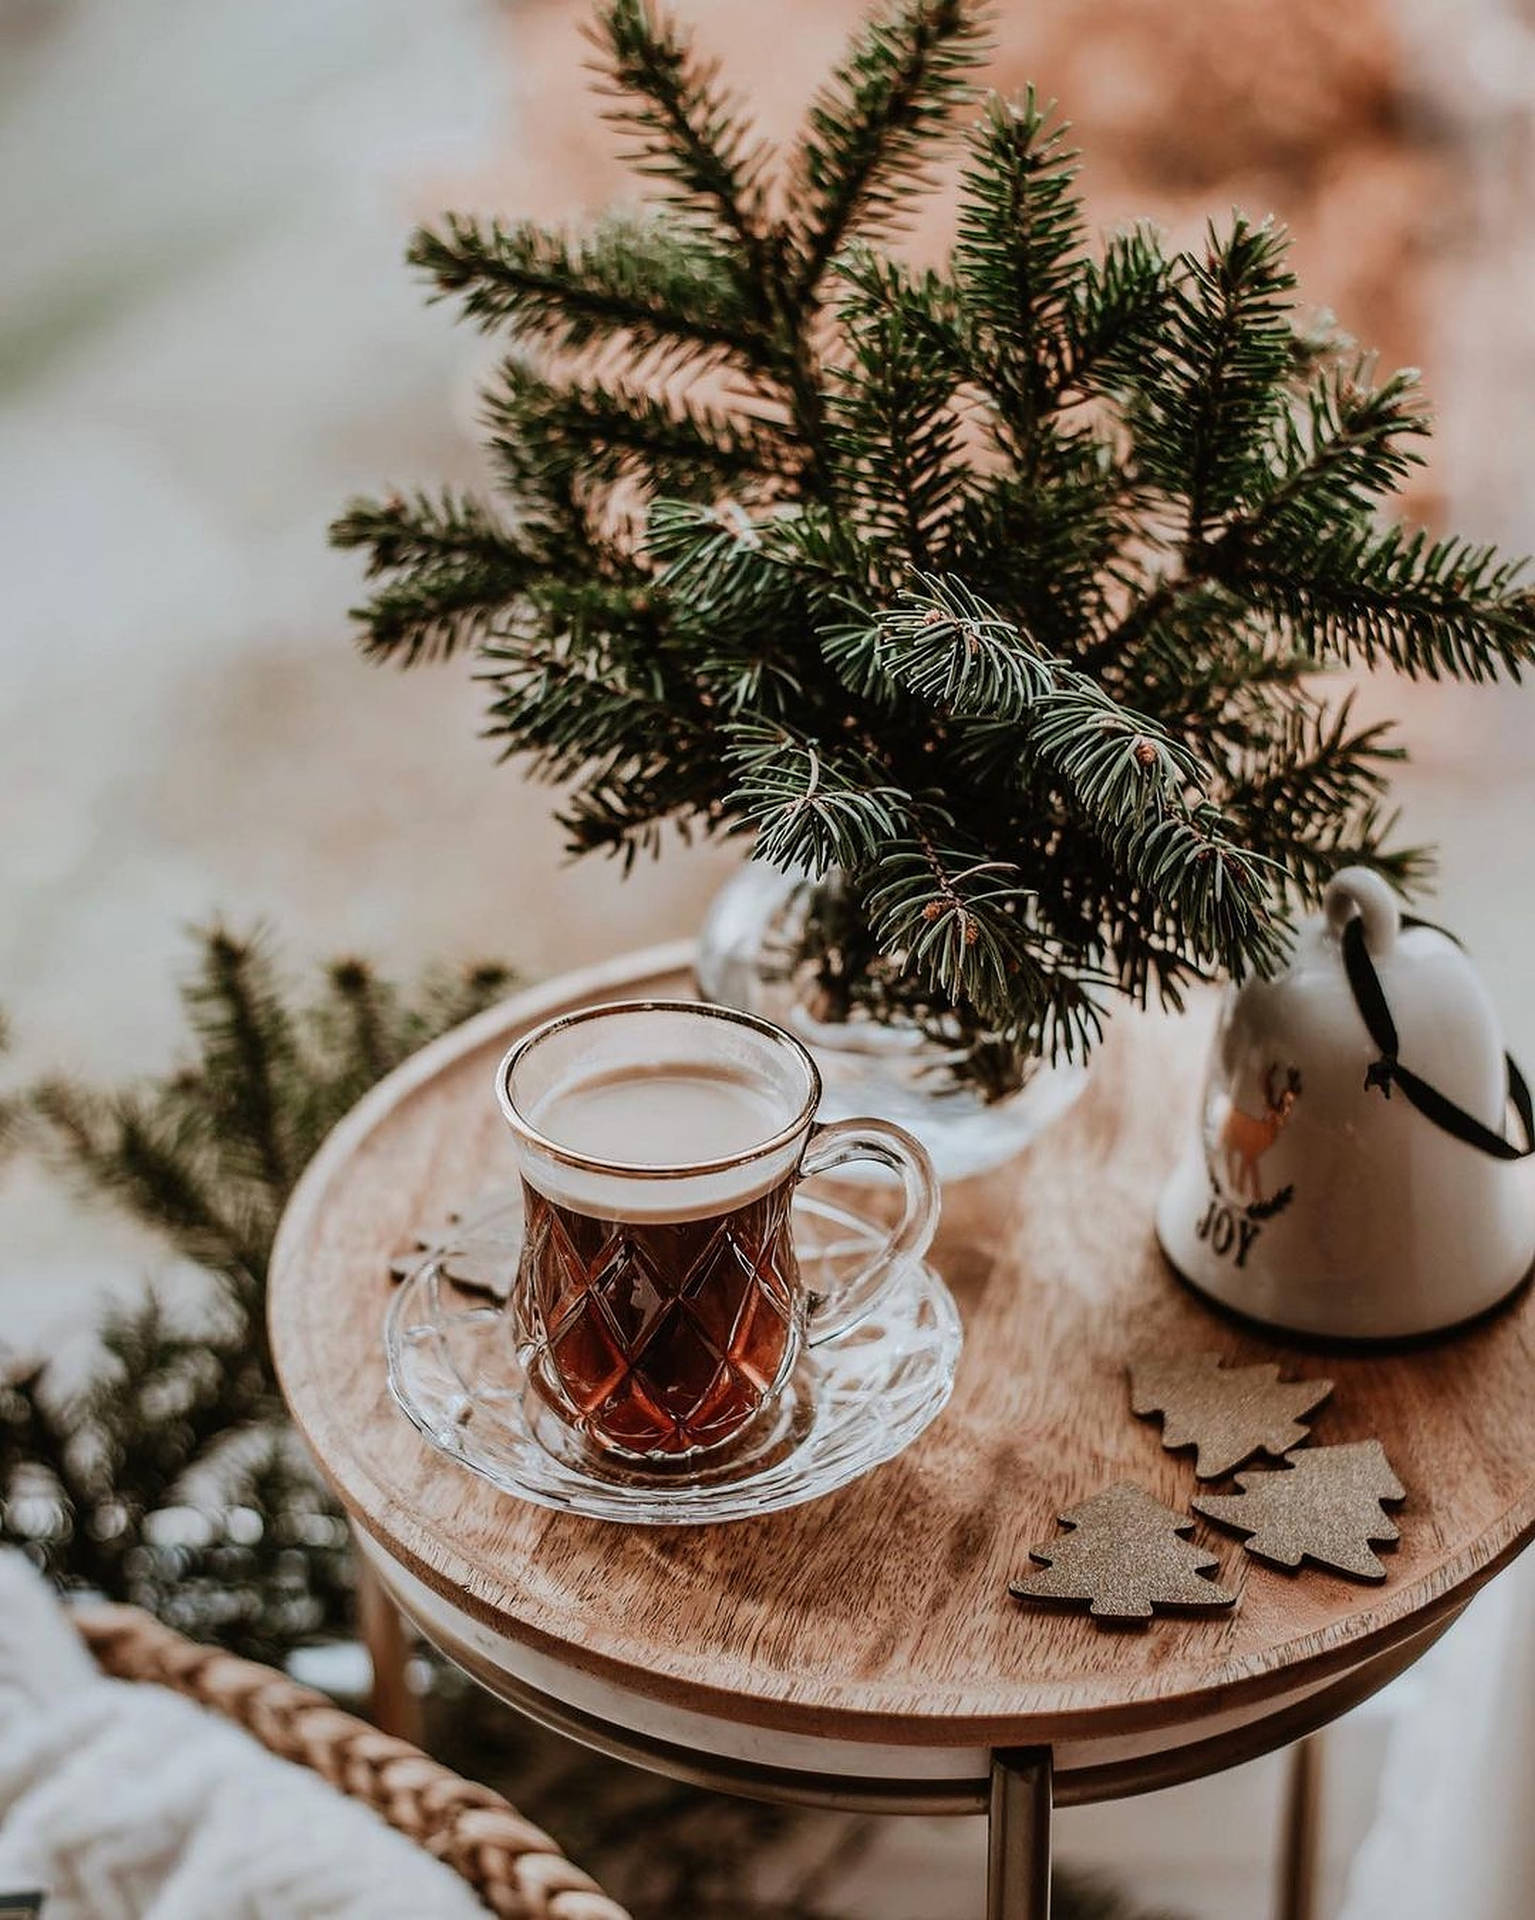 Cozy Christmas Aesthetic Hot Tea